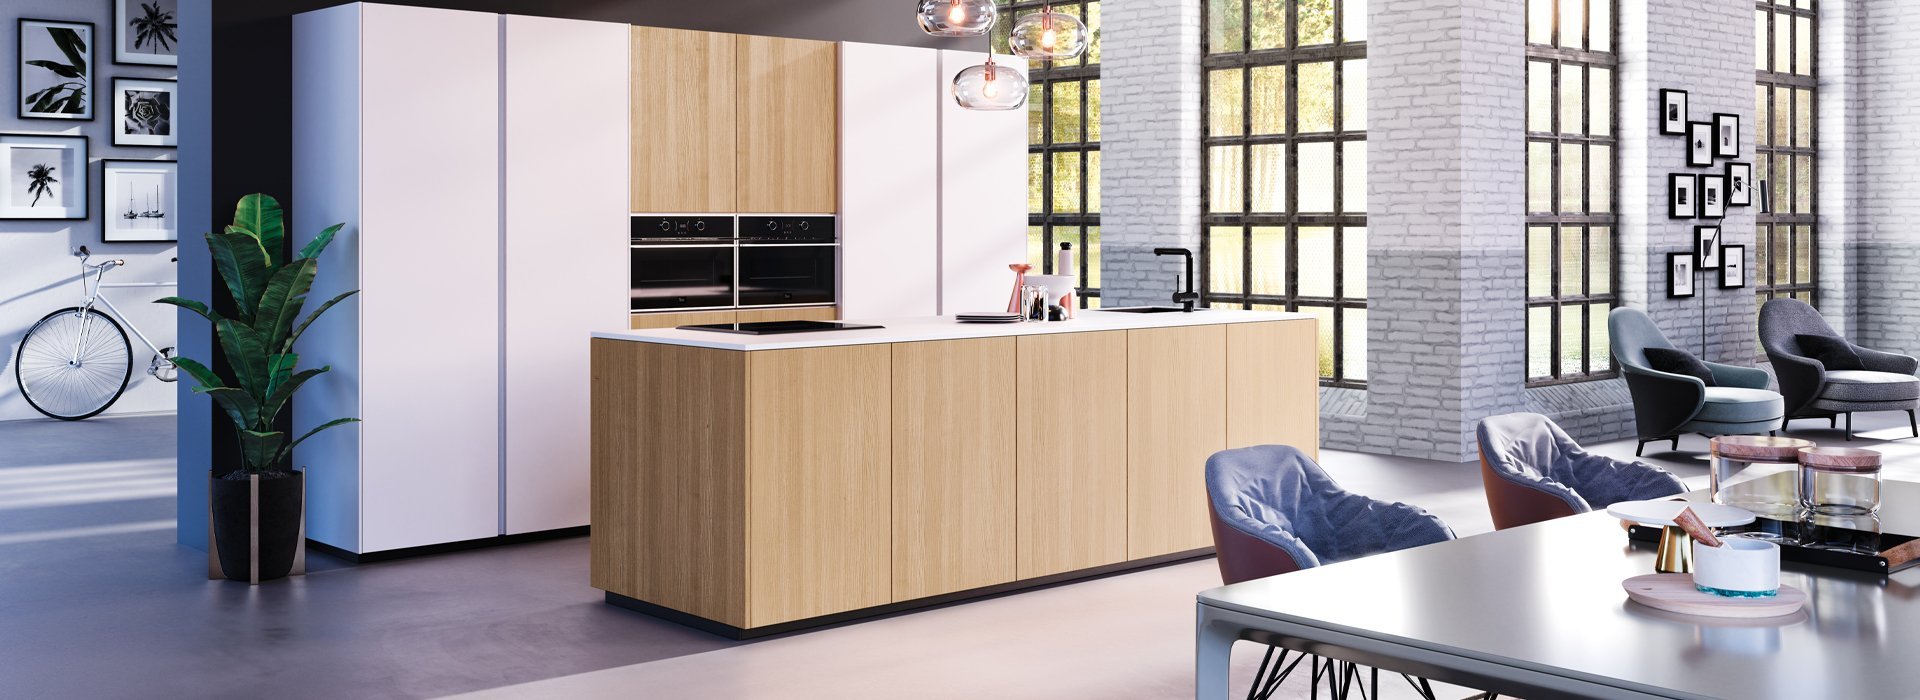 Modern open plan kitchen living space